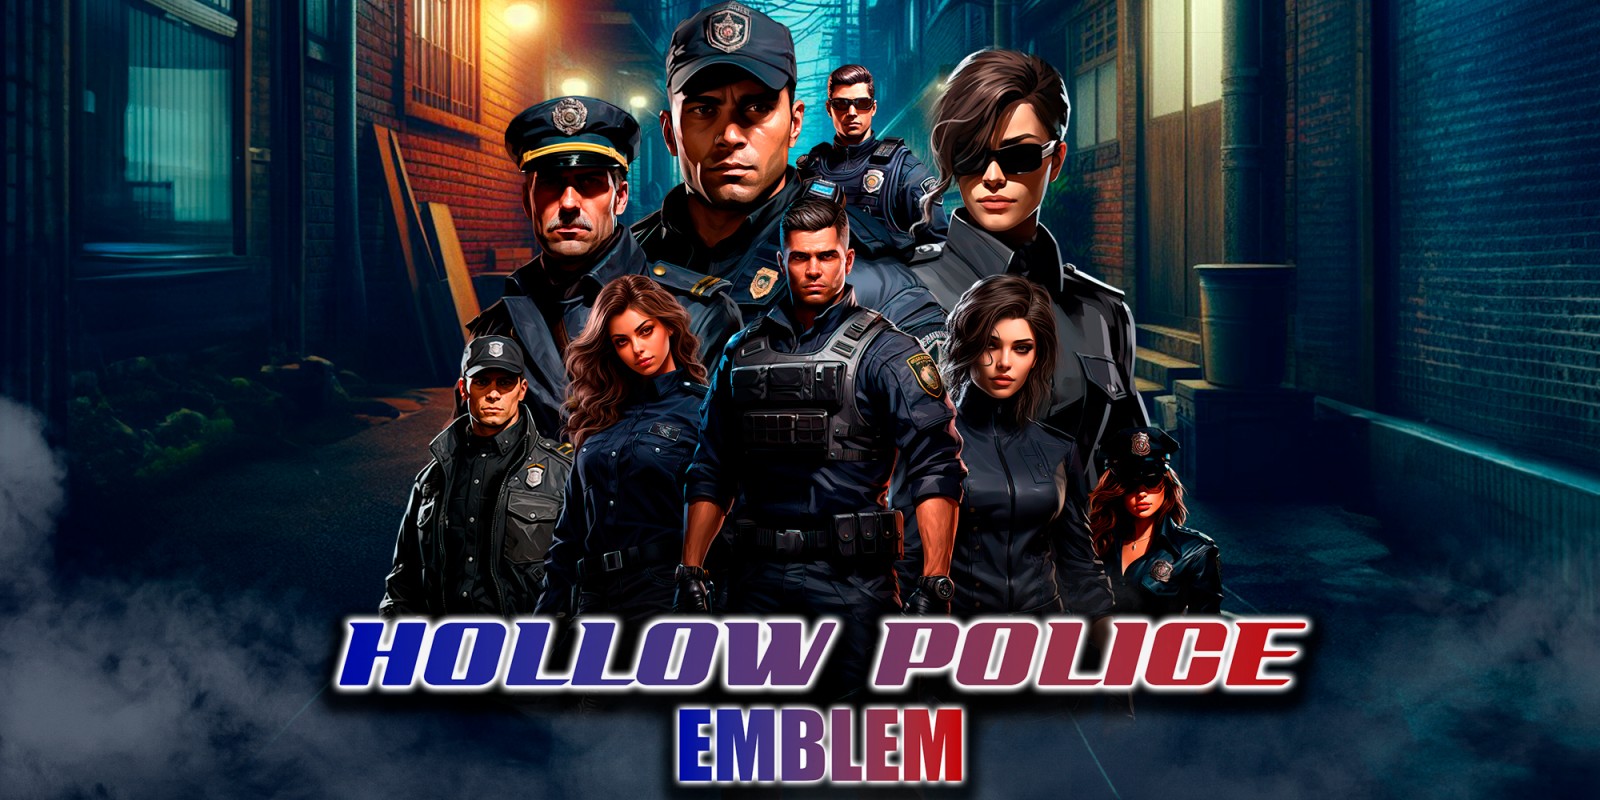 Hollow Police Emblem: The Visual Novel